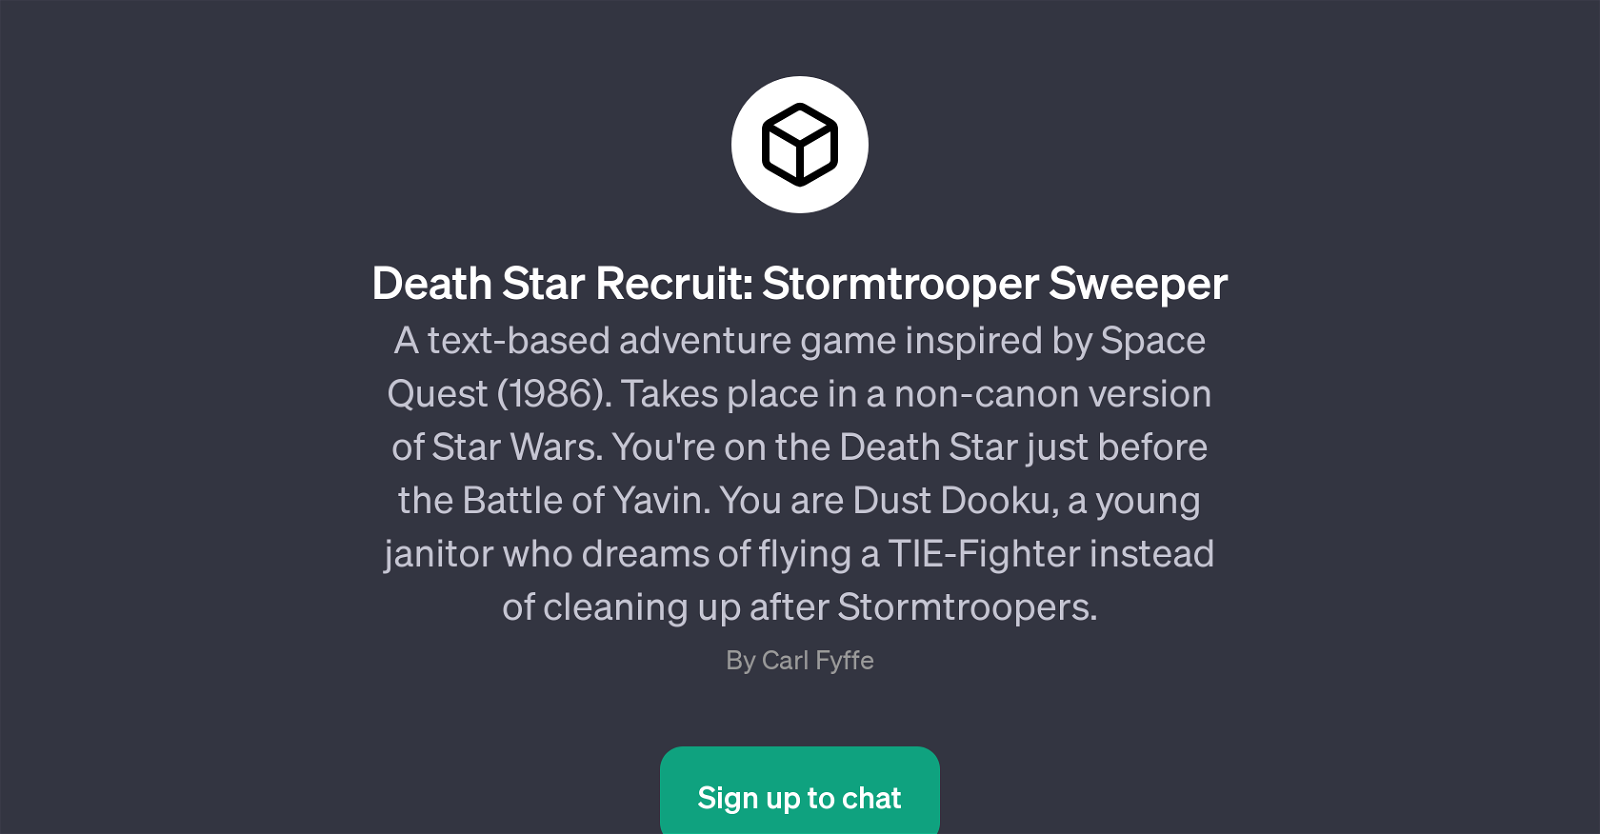 Death Star Recruit: Stormtrooper Sweeper website